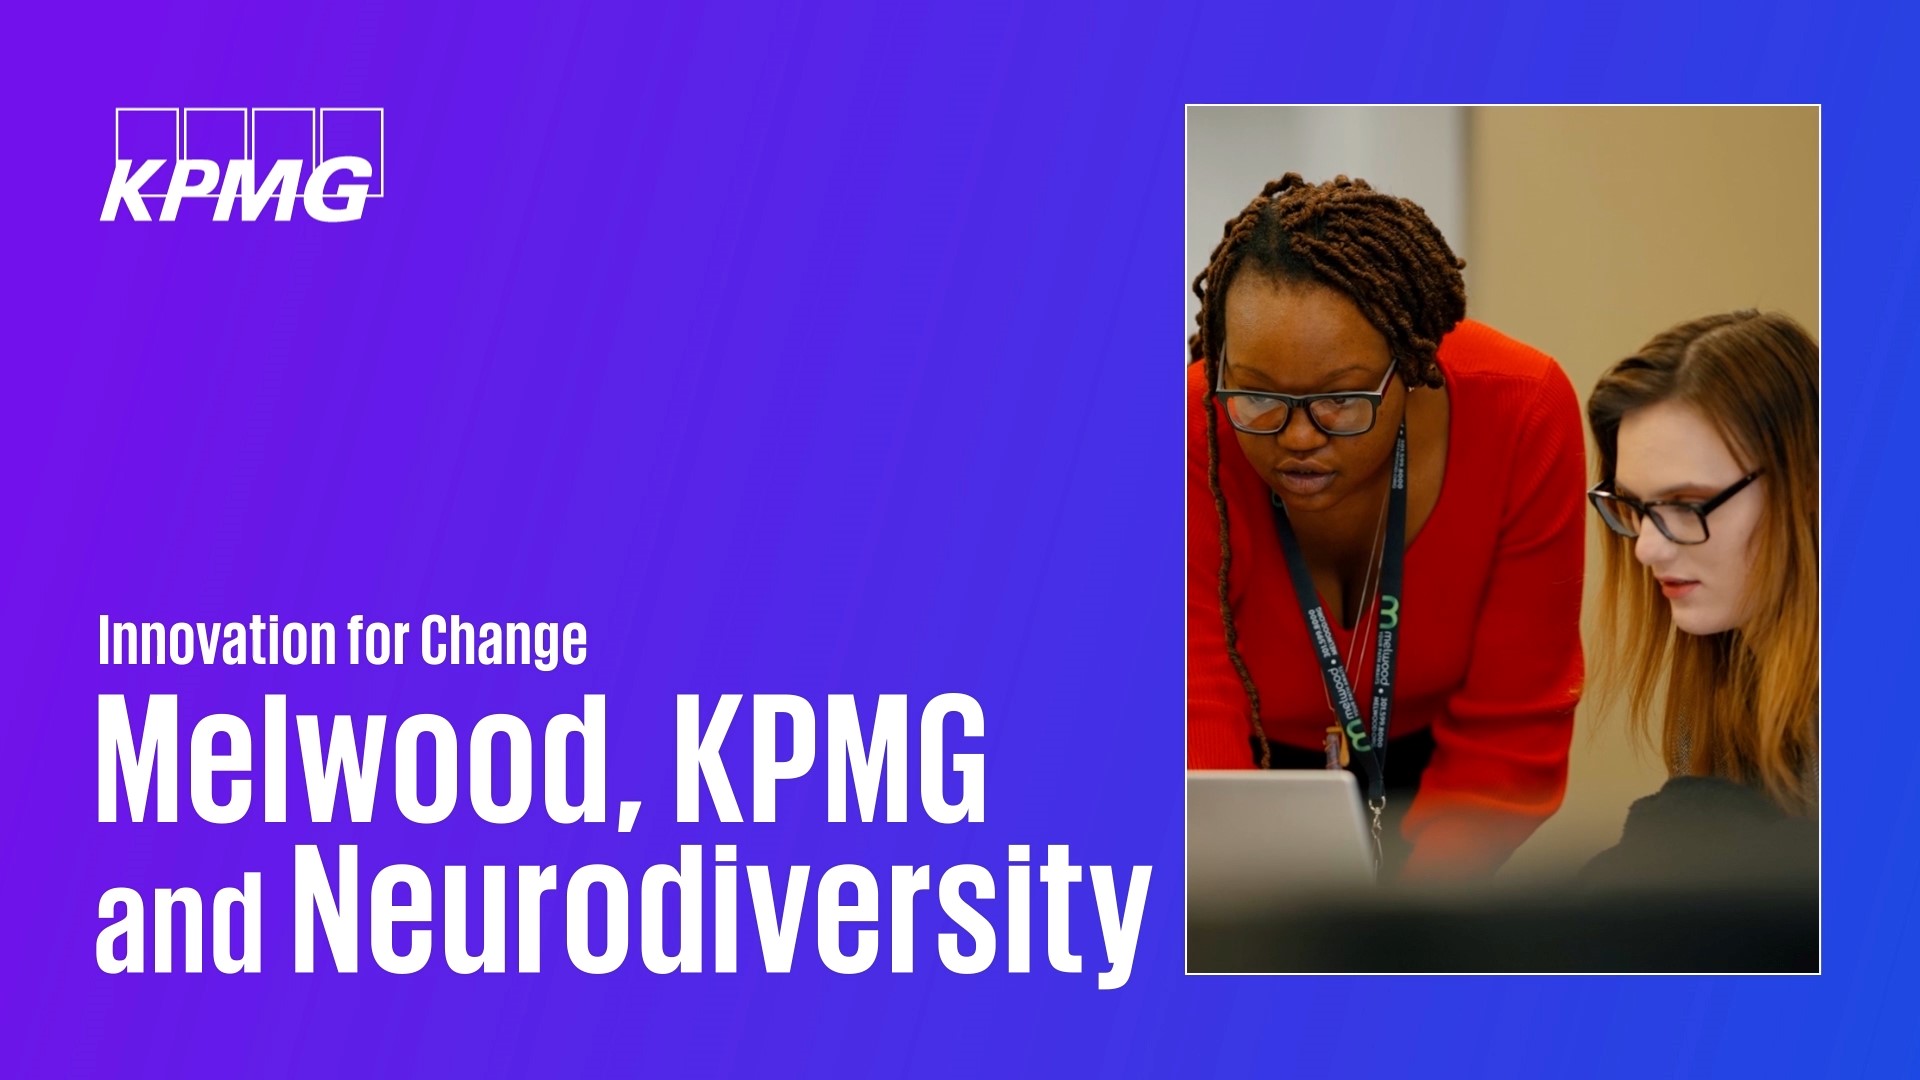 Melwood, KPMG and Neurodiversity